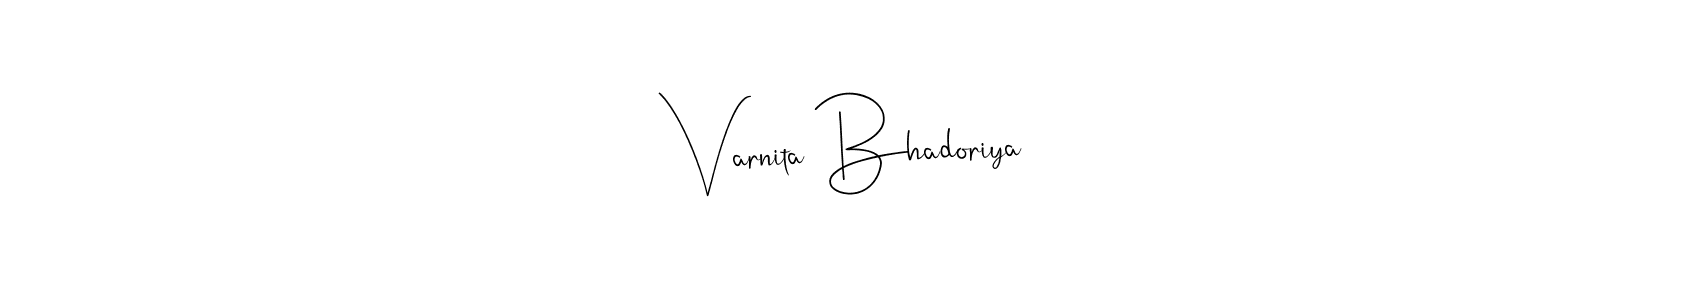 How to make Varnita Bhadoriya signature? Andilay-7BmLP is a professional autograph style. Create handwritten signature for Varnita Bhadoriya name. Varnita Bhadoriya signature style 4 images and pictures png